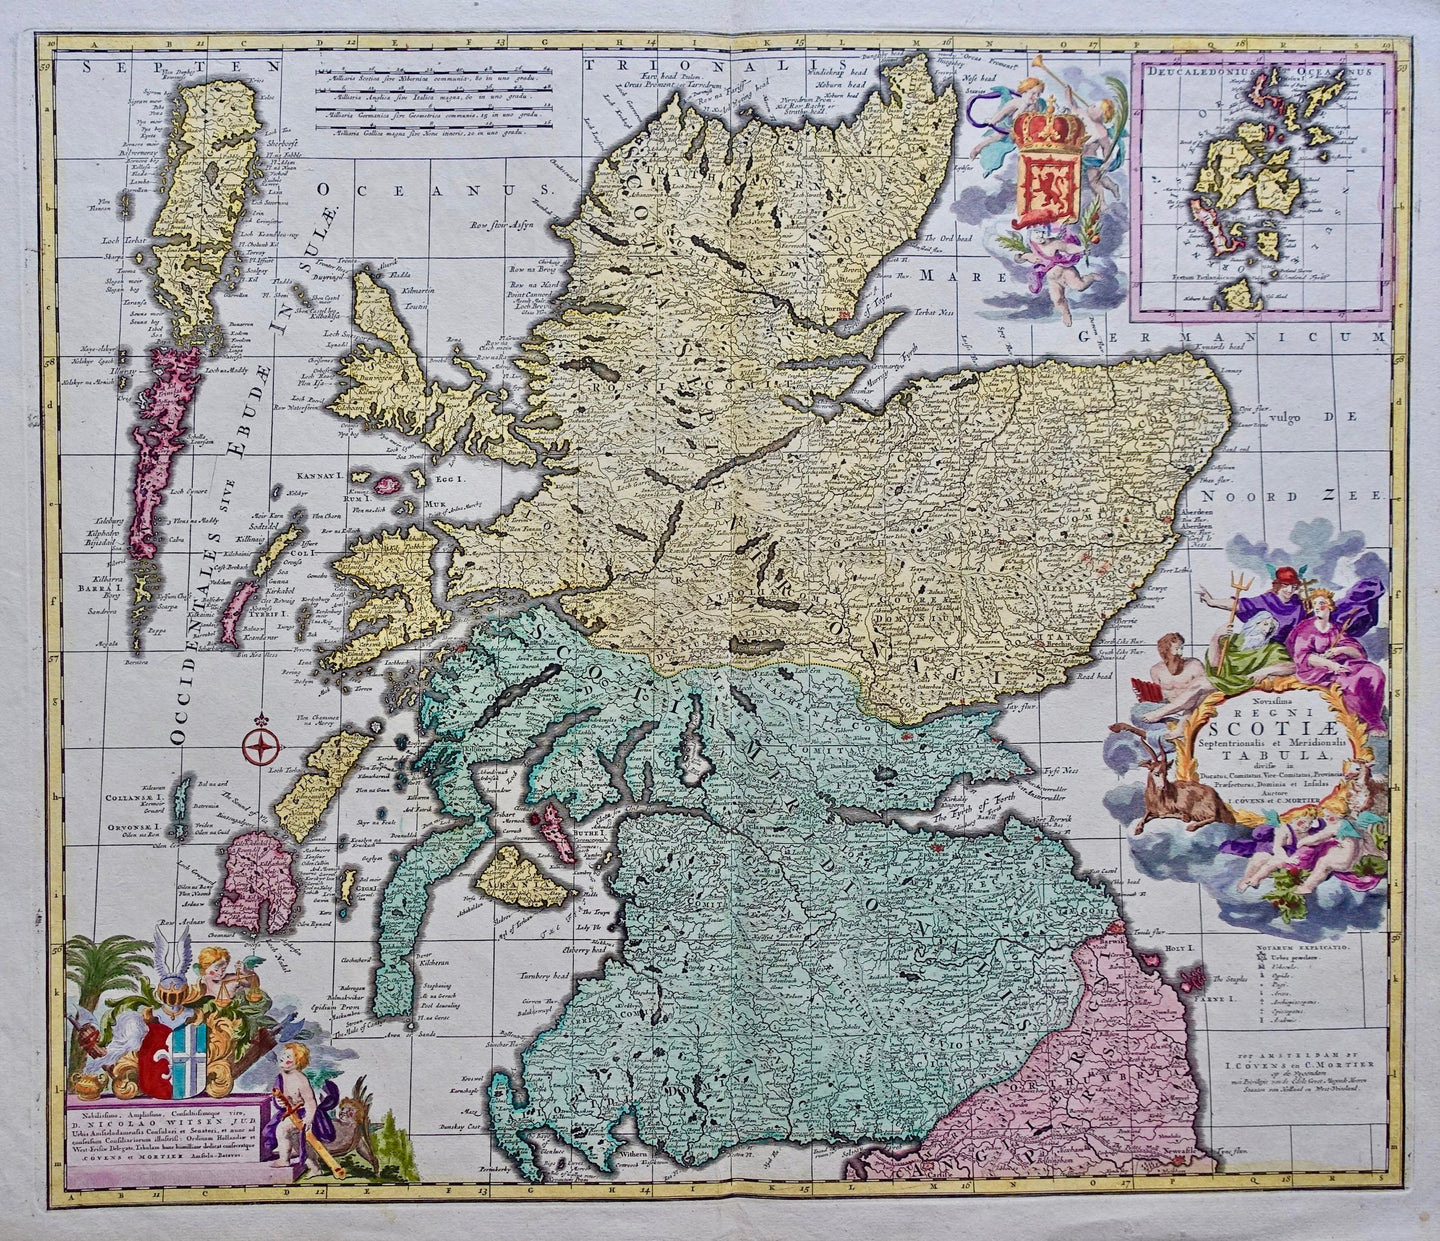 Schotland British Isles Scotland - J Covens & C Mortier - circa 1730